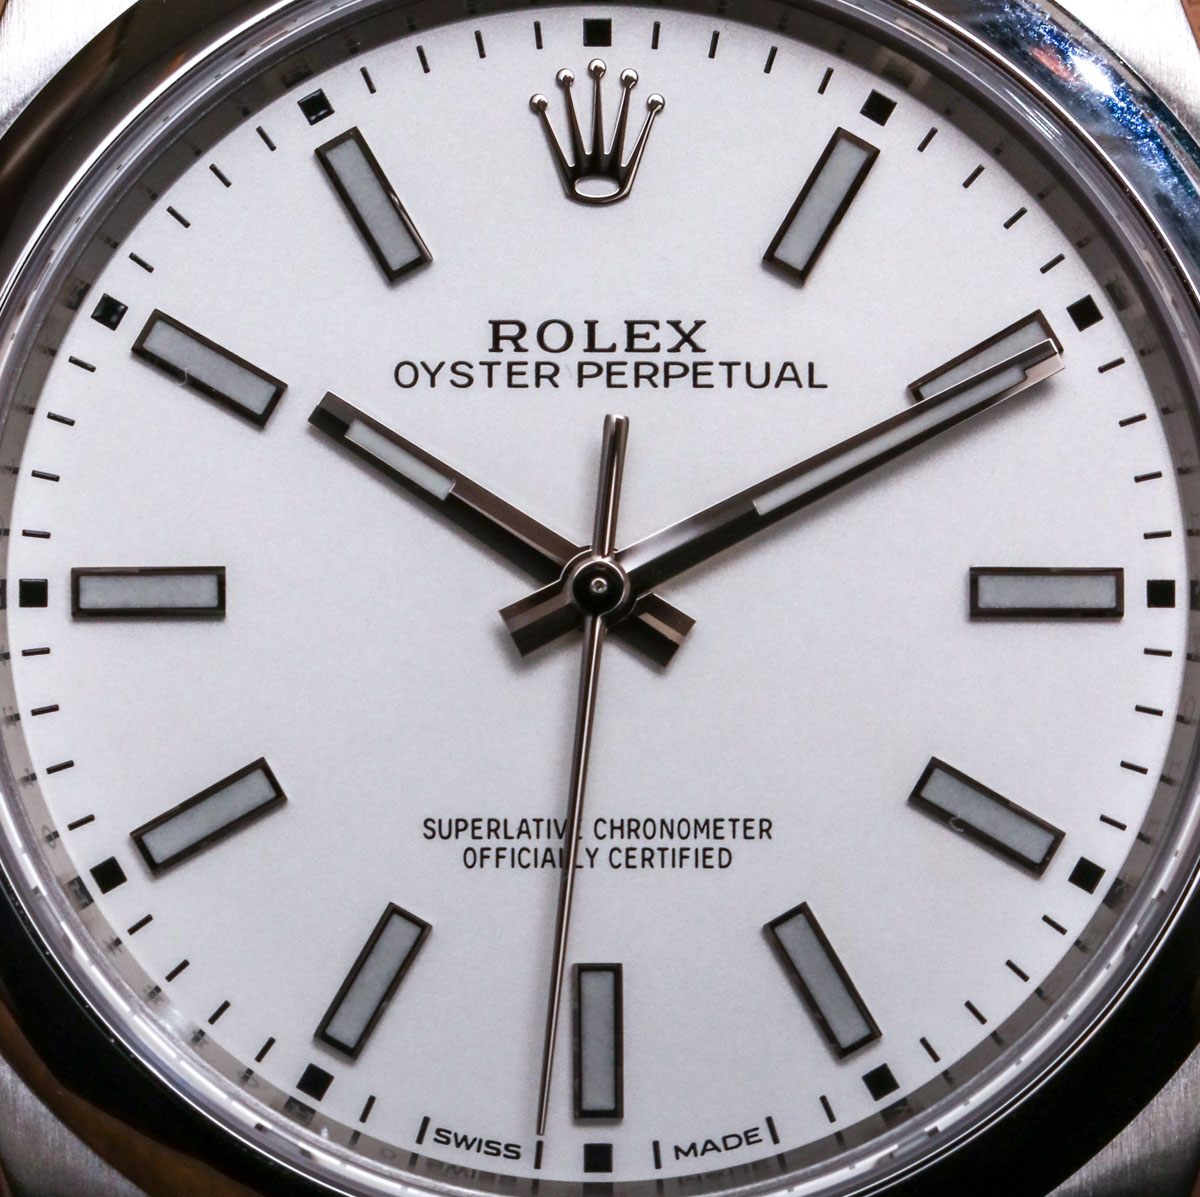 Rolex Oyster Perpetual 39 114300 黑、白表盤腕表評測 腕上評測 